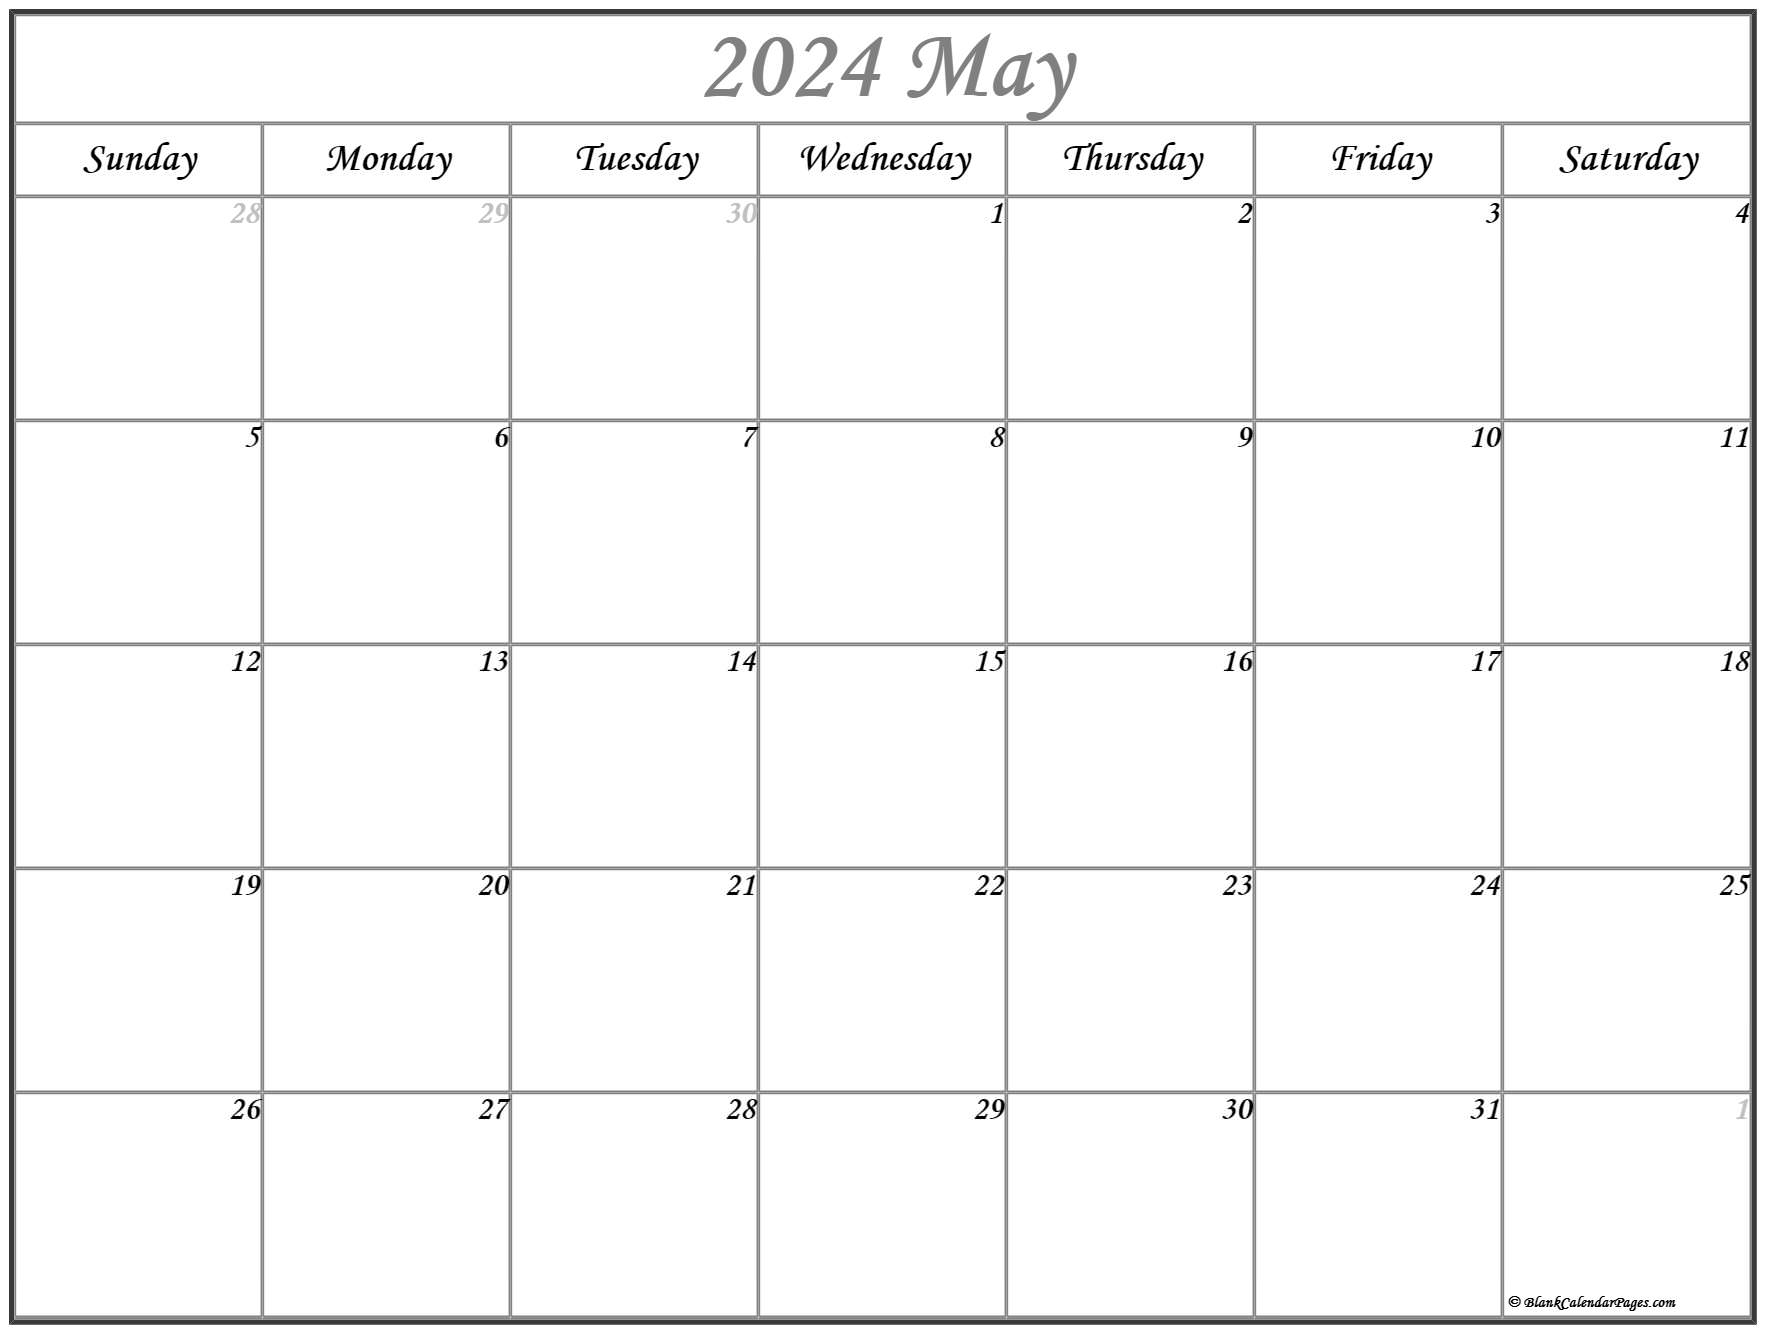 May 2021 calendar | free printable calendar templates